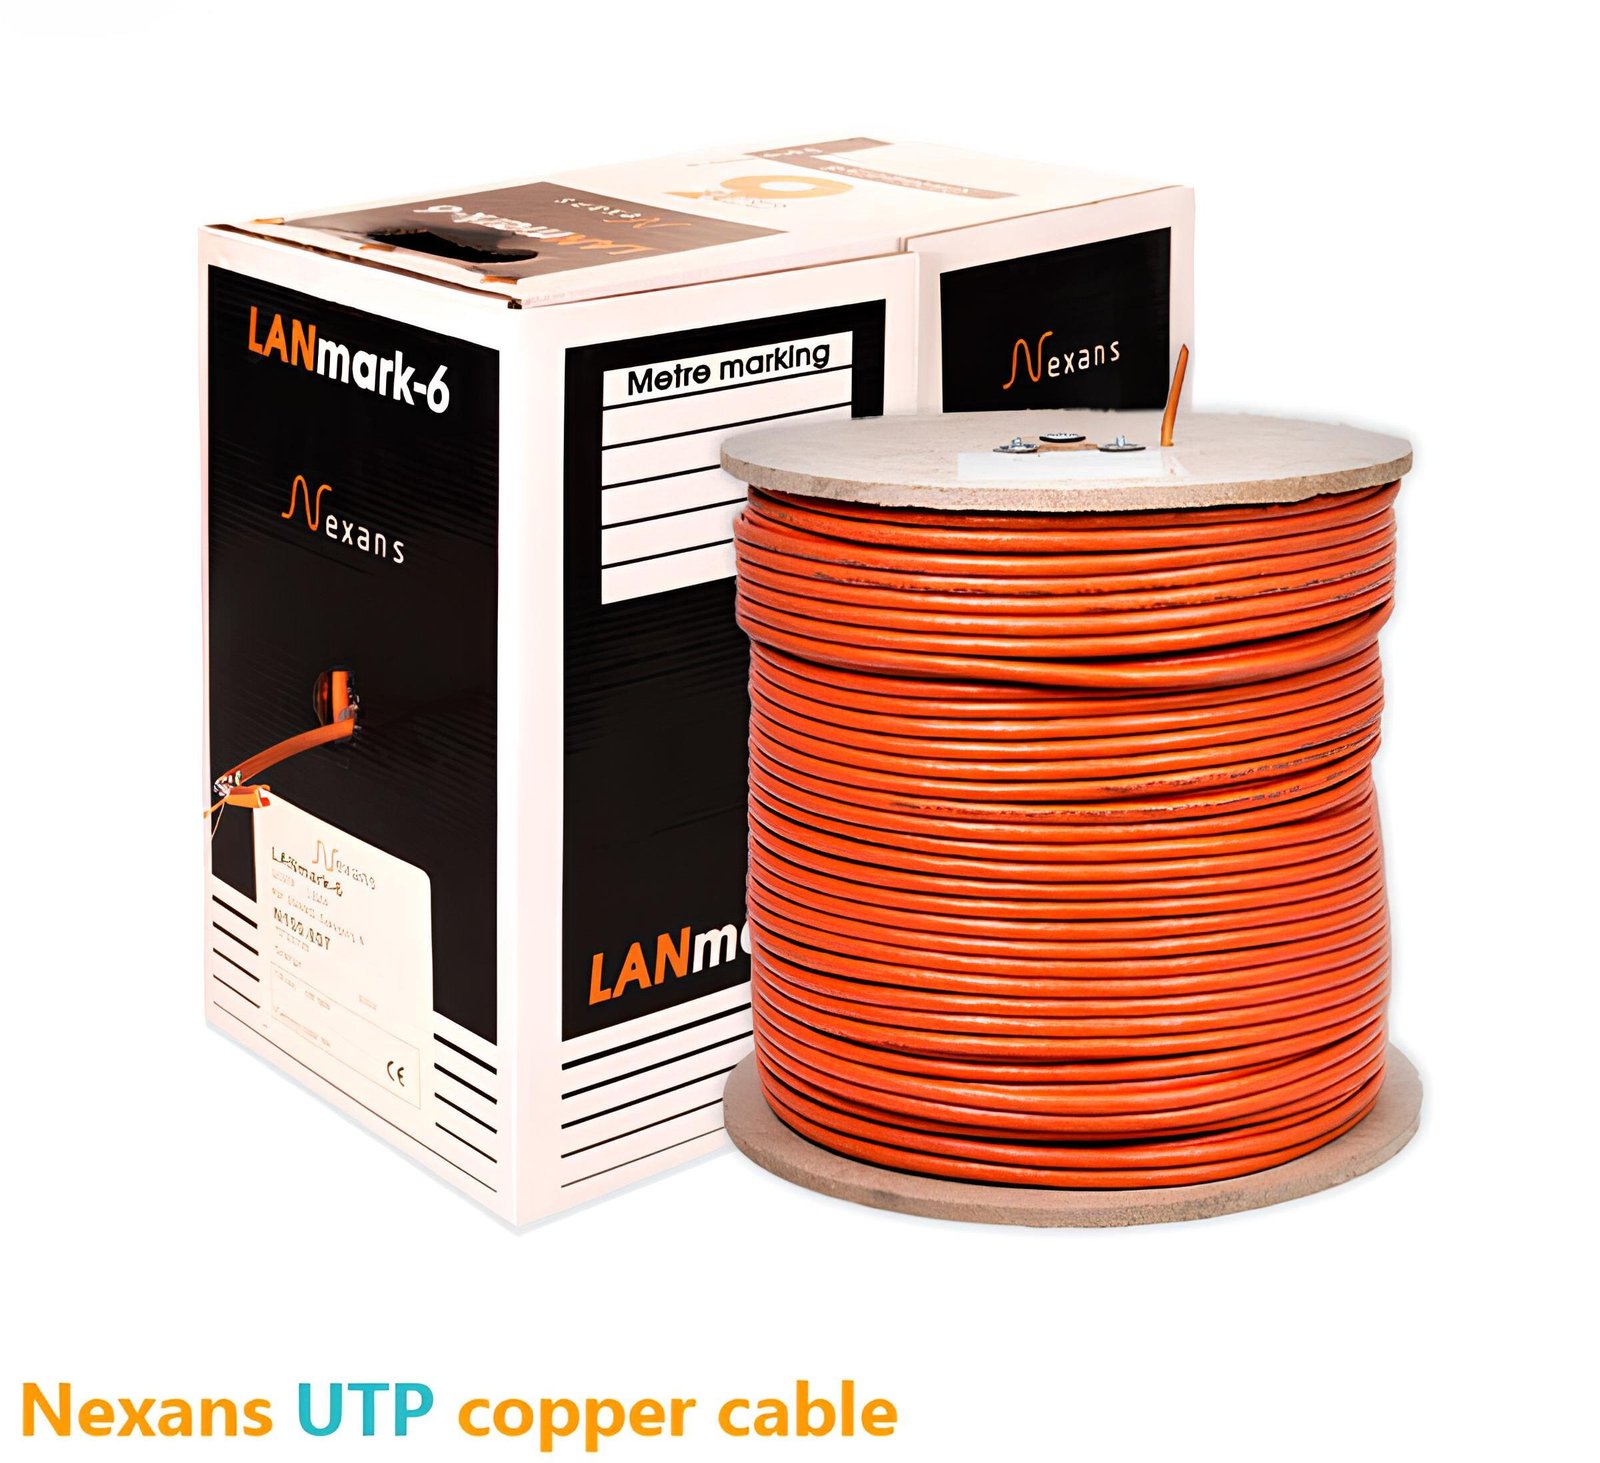 Nexans Cable Distributors in UAE